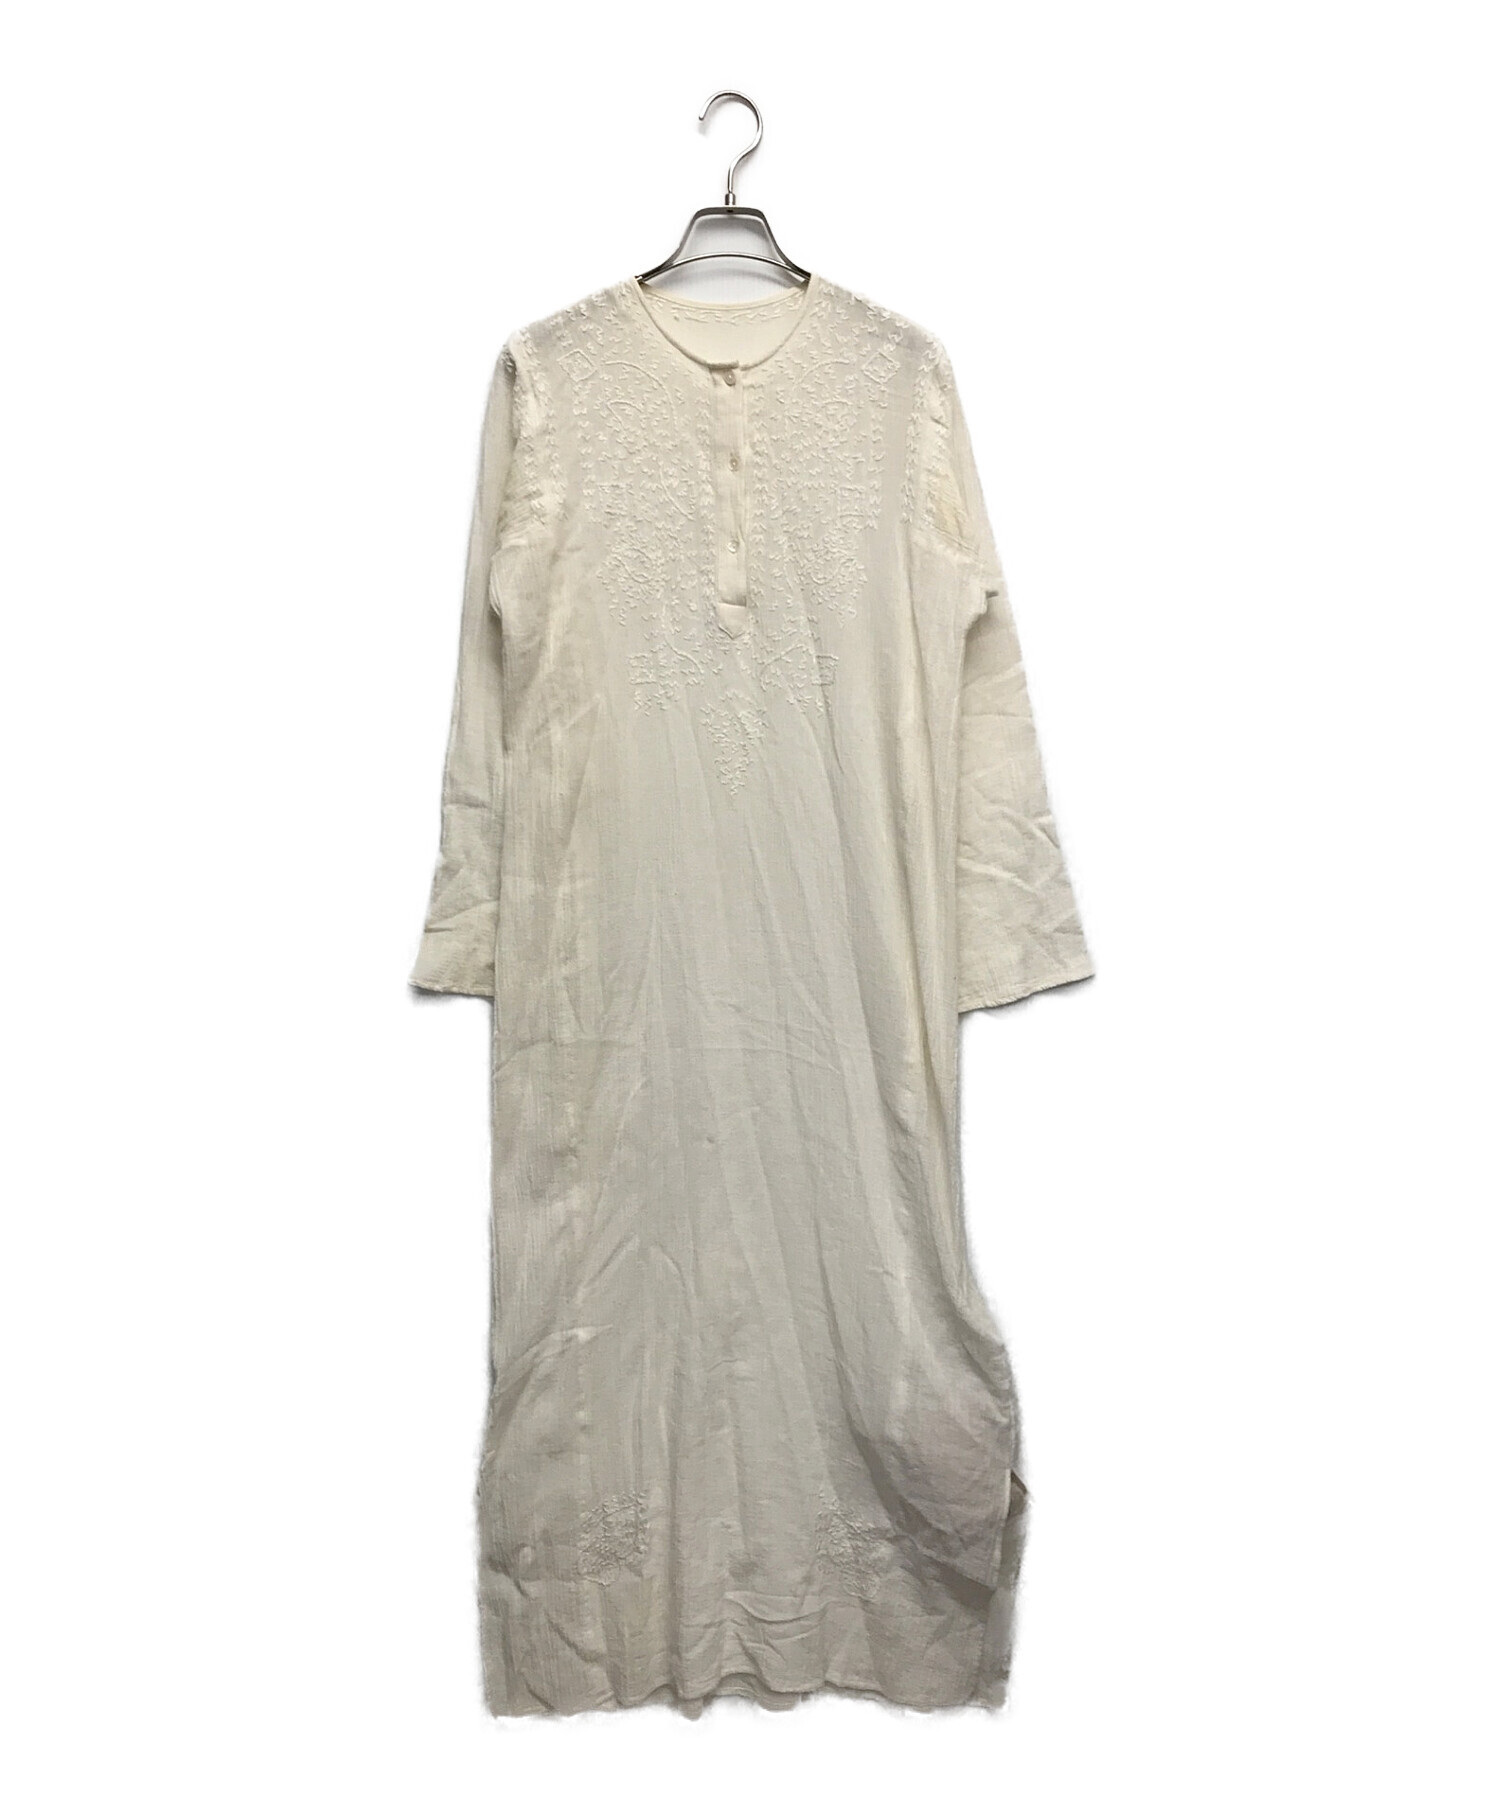 TODAYFUL (トゥデイフル) Embroidery Gauze Dress ホワイト サイズ:38